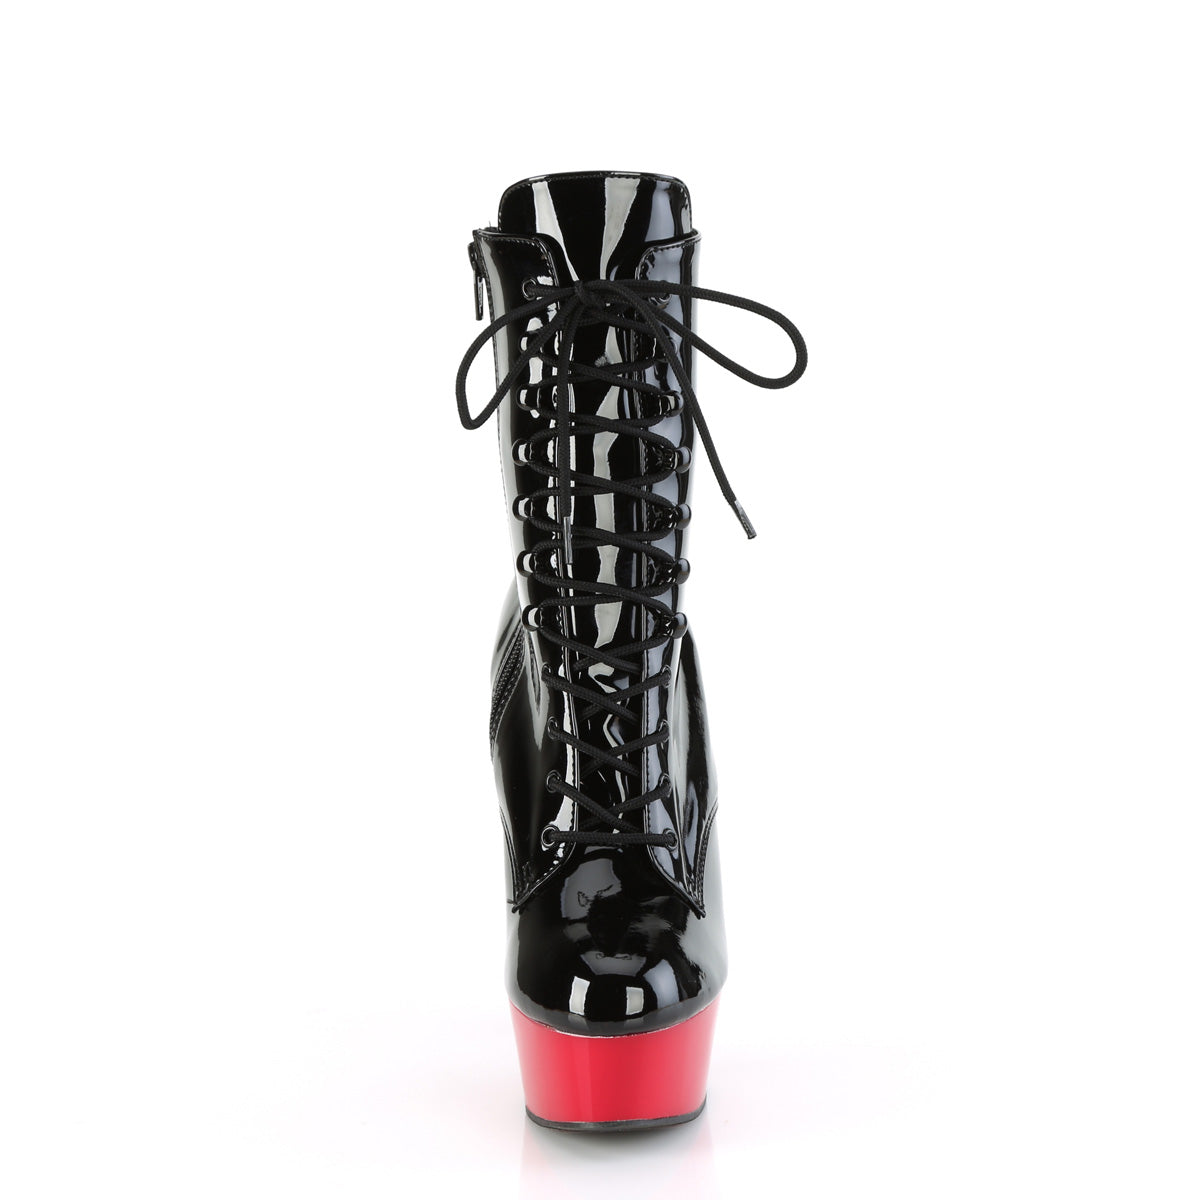 6 Inch Heel DELIGHT-1020 Black Patent Red